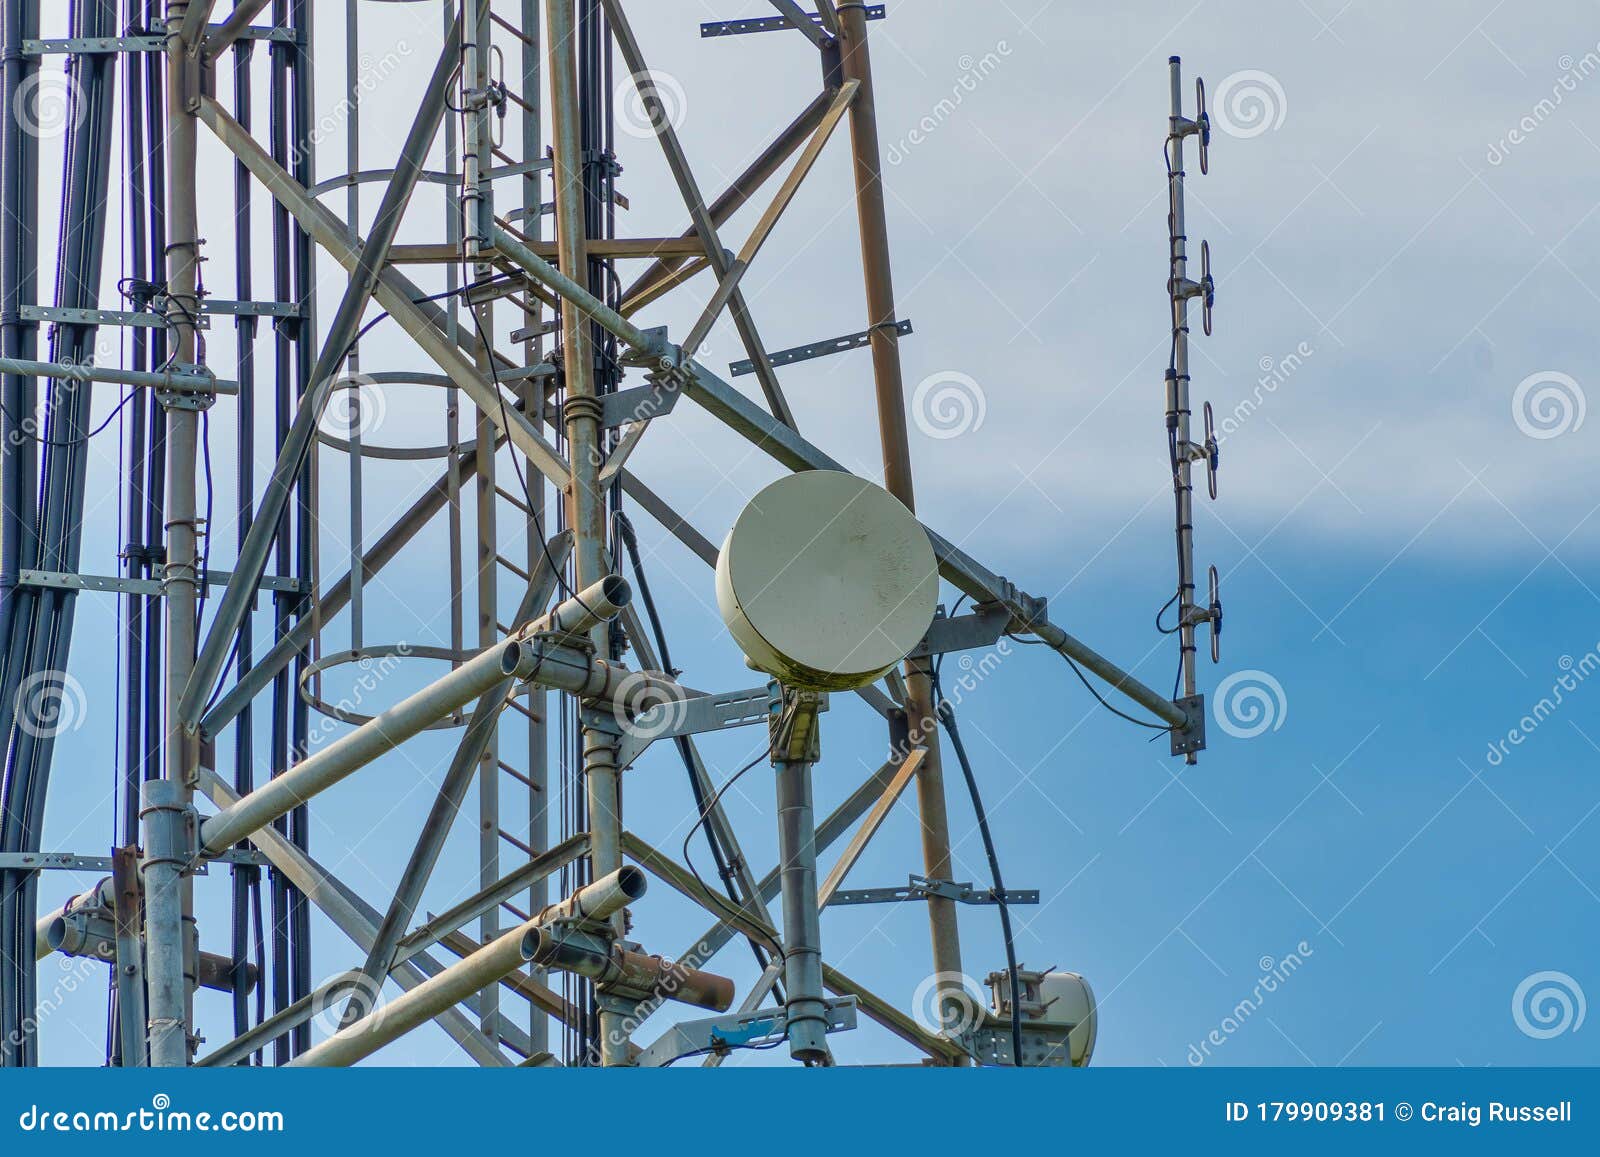 Cellular Microwave Wireless Directional Communication Antenna Stock Image Image Of Emit Wireless 179909381